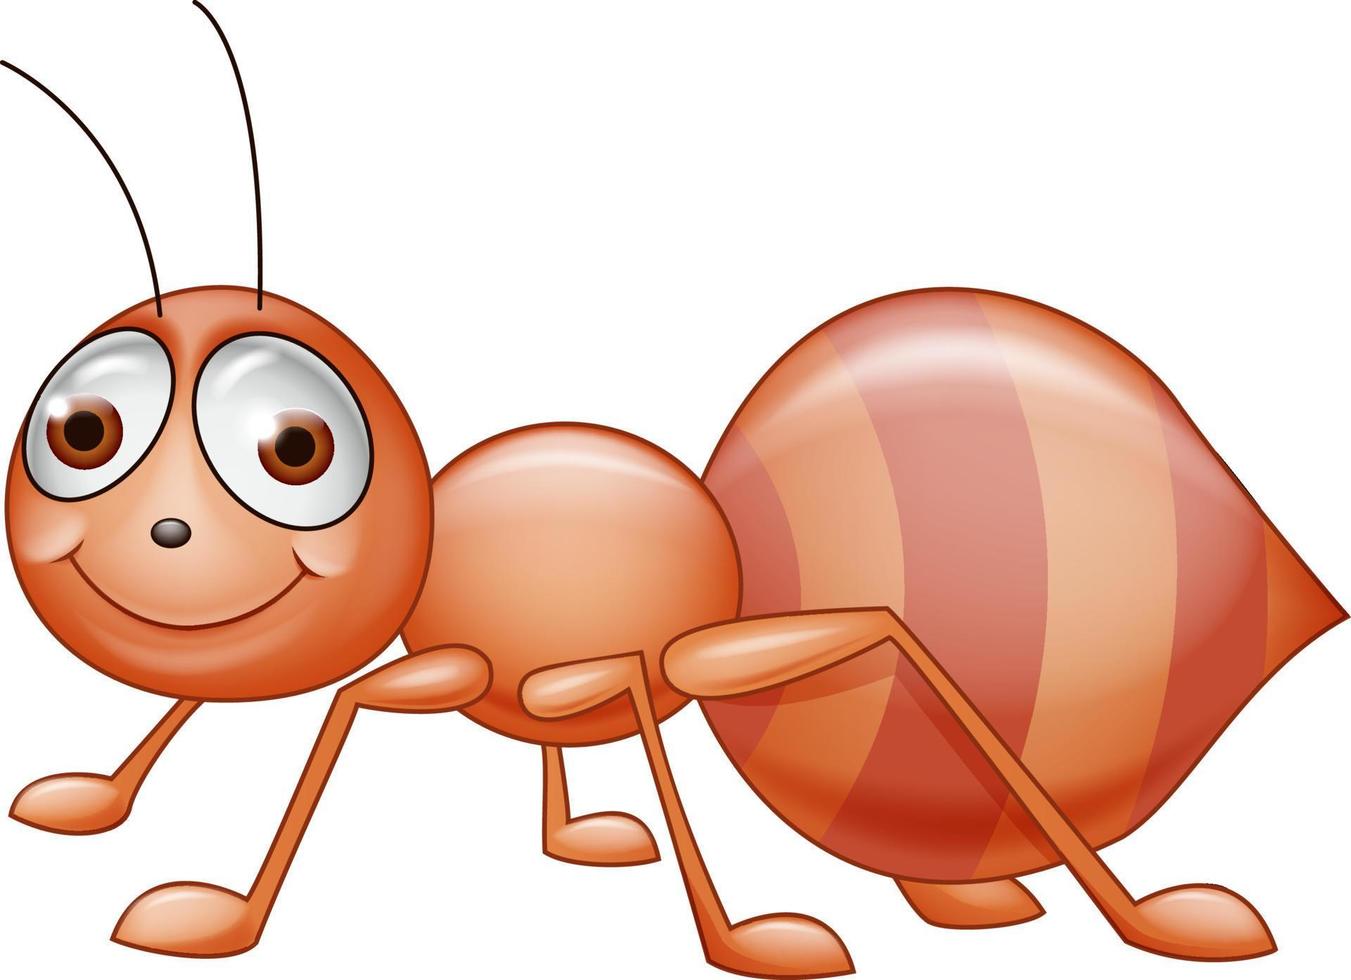 Vector illustration of ant cartoon